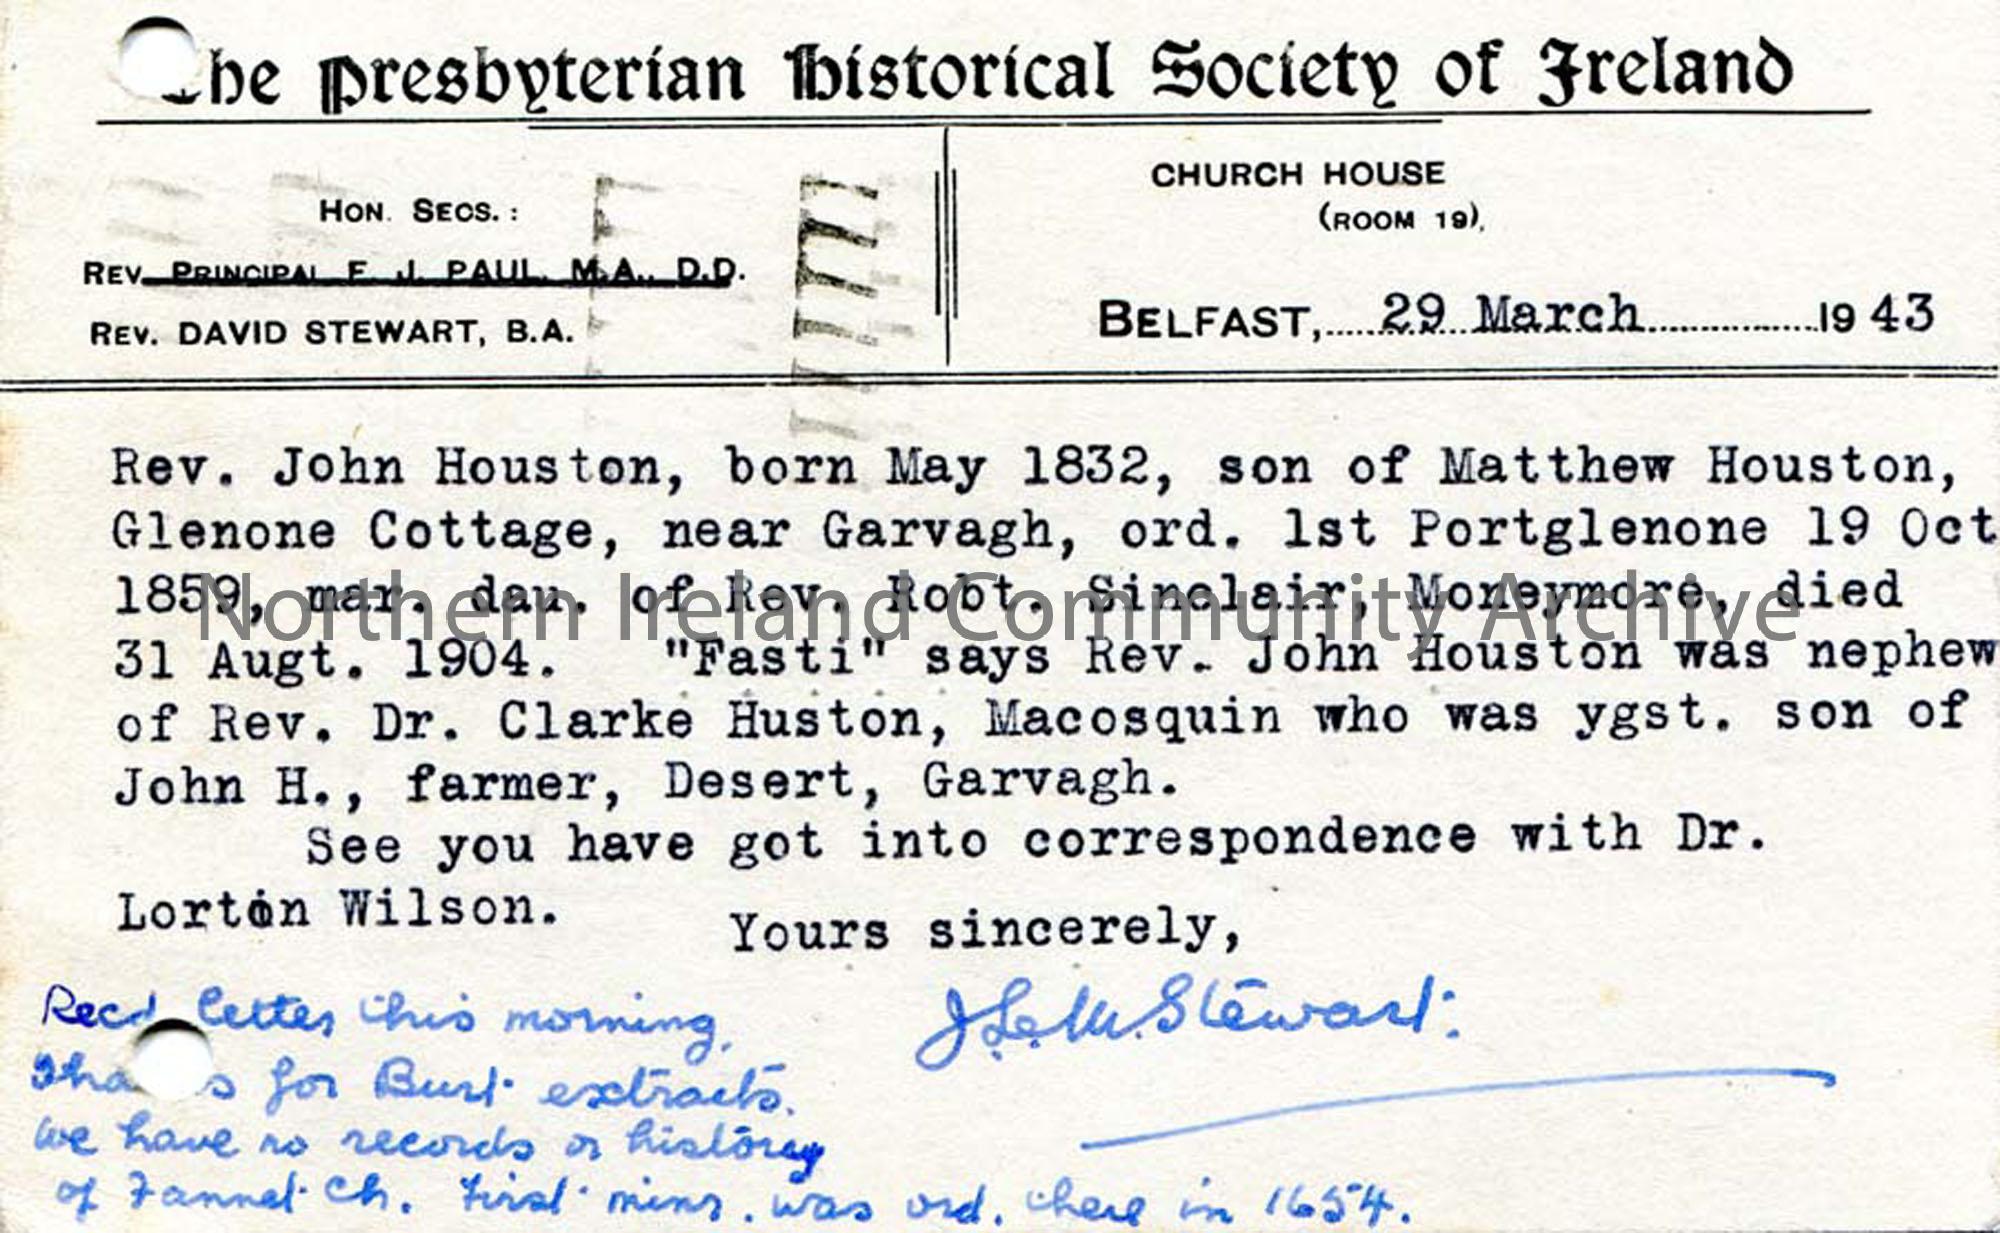 Postcard from J Stewart 29.3.1943